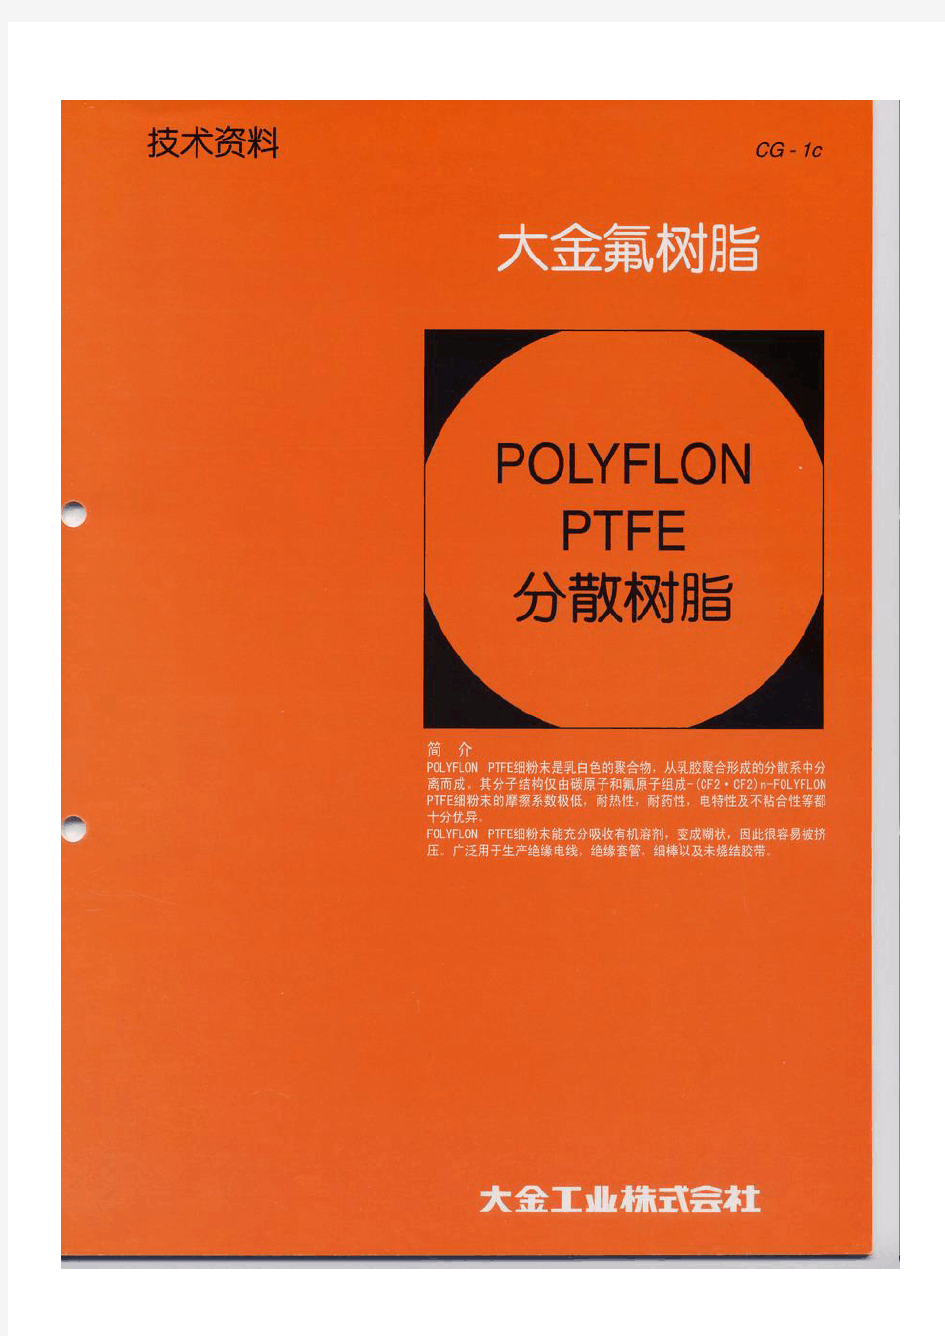 Catalog-PTFE-F_cn